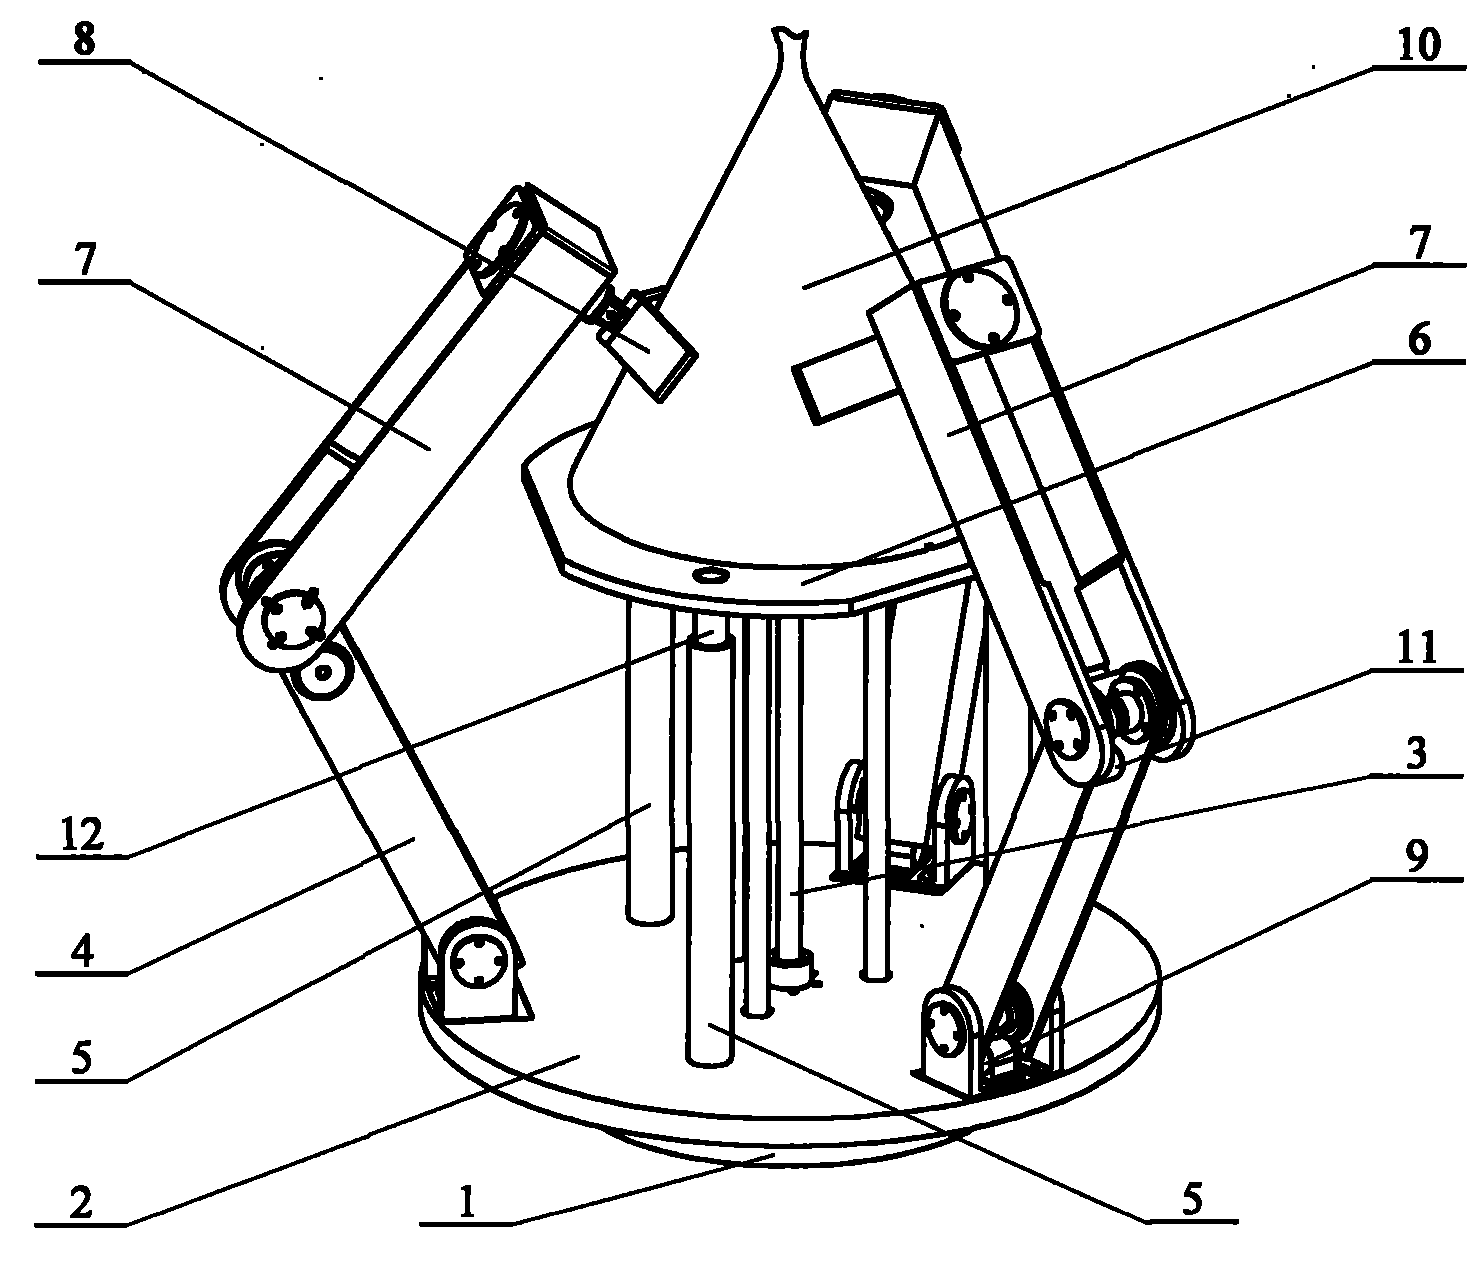 Three-arm type noncooperative target docking mechanism